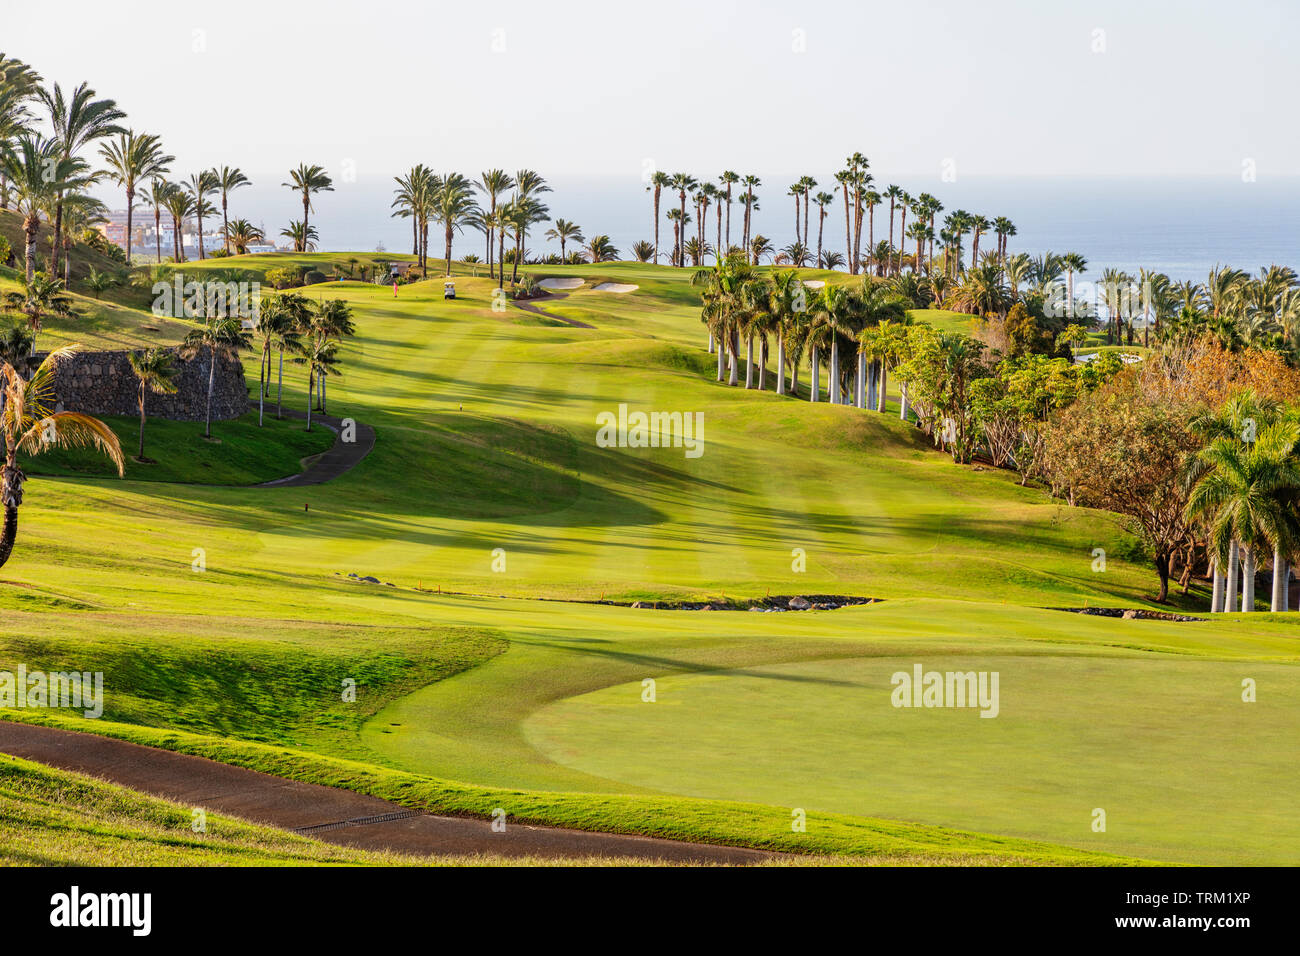 Europe, Spain, Canary Islands, Tenerife, Abama golf course Stock Photo -  Alamy